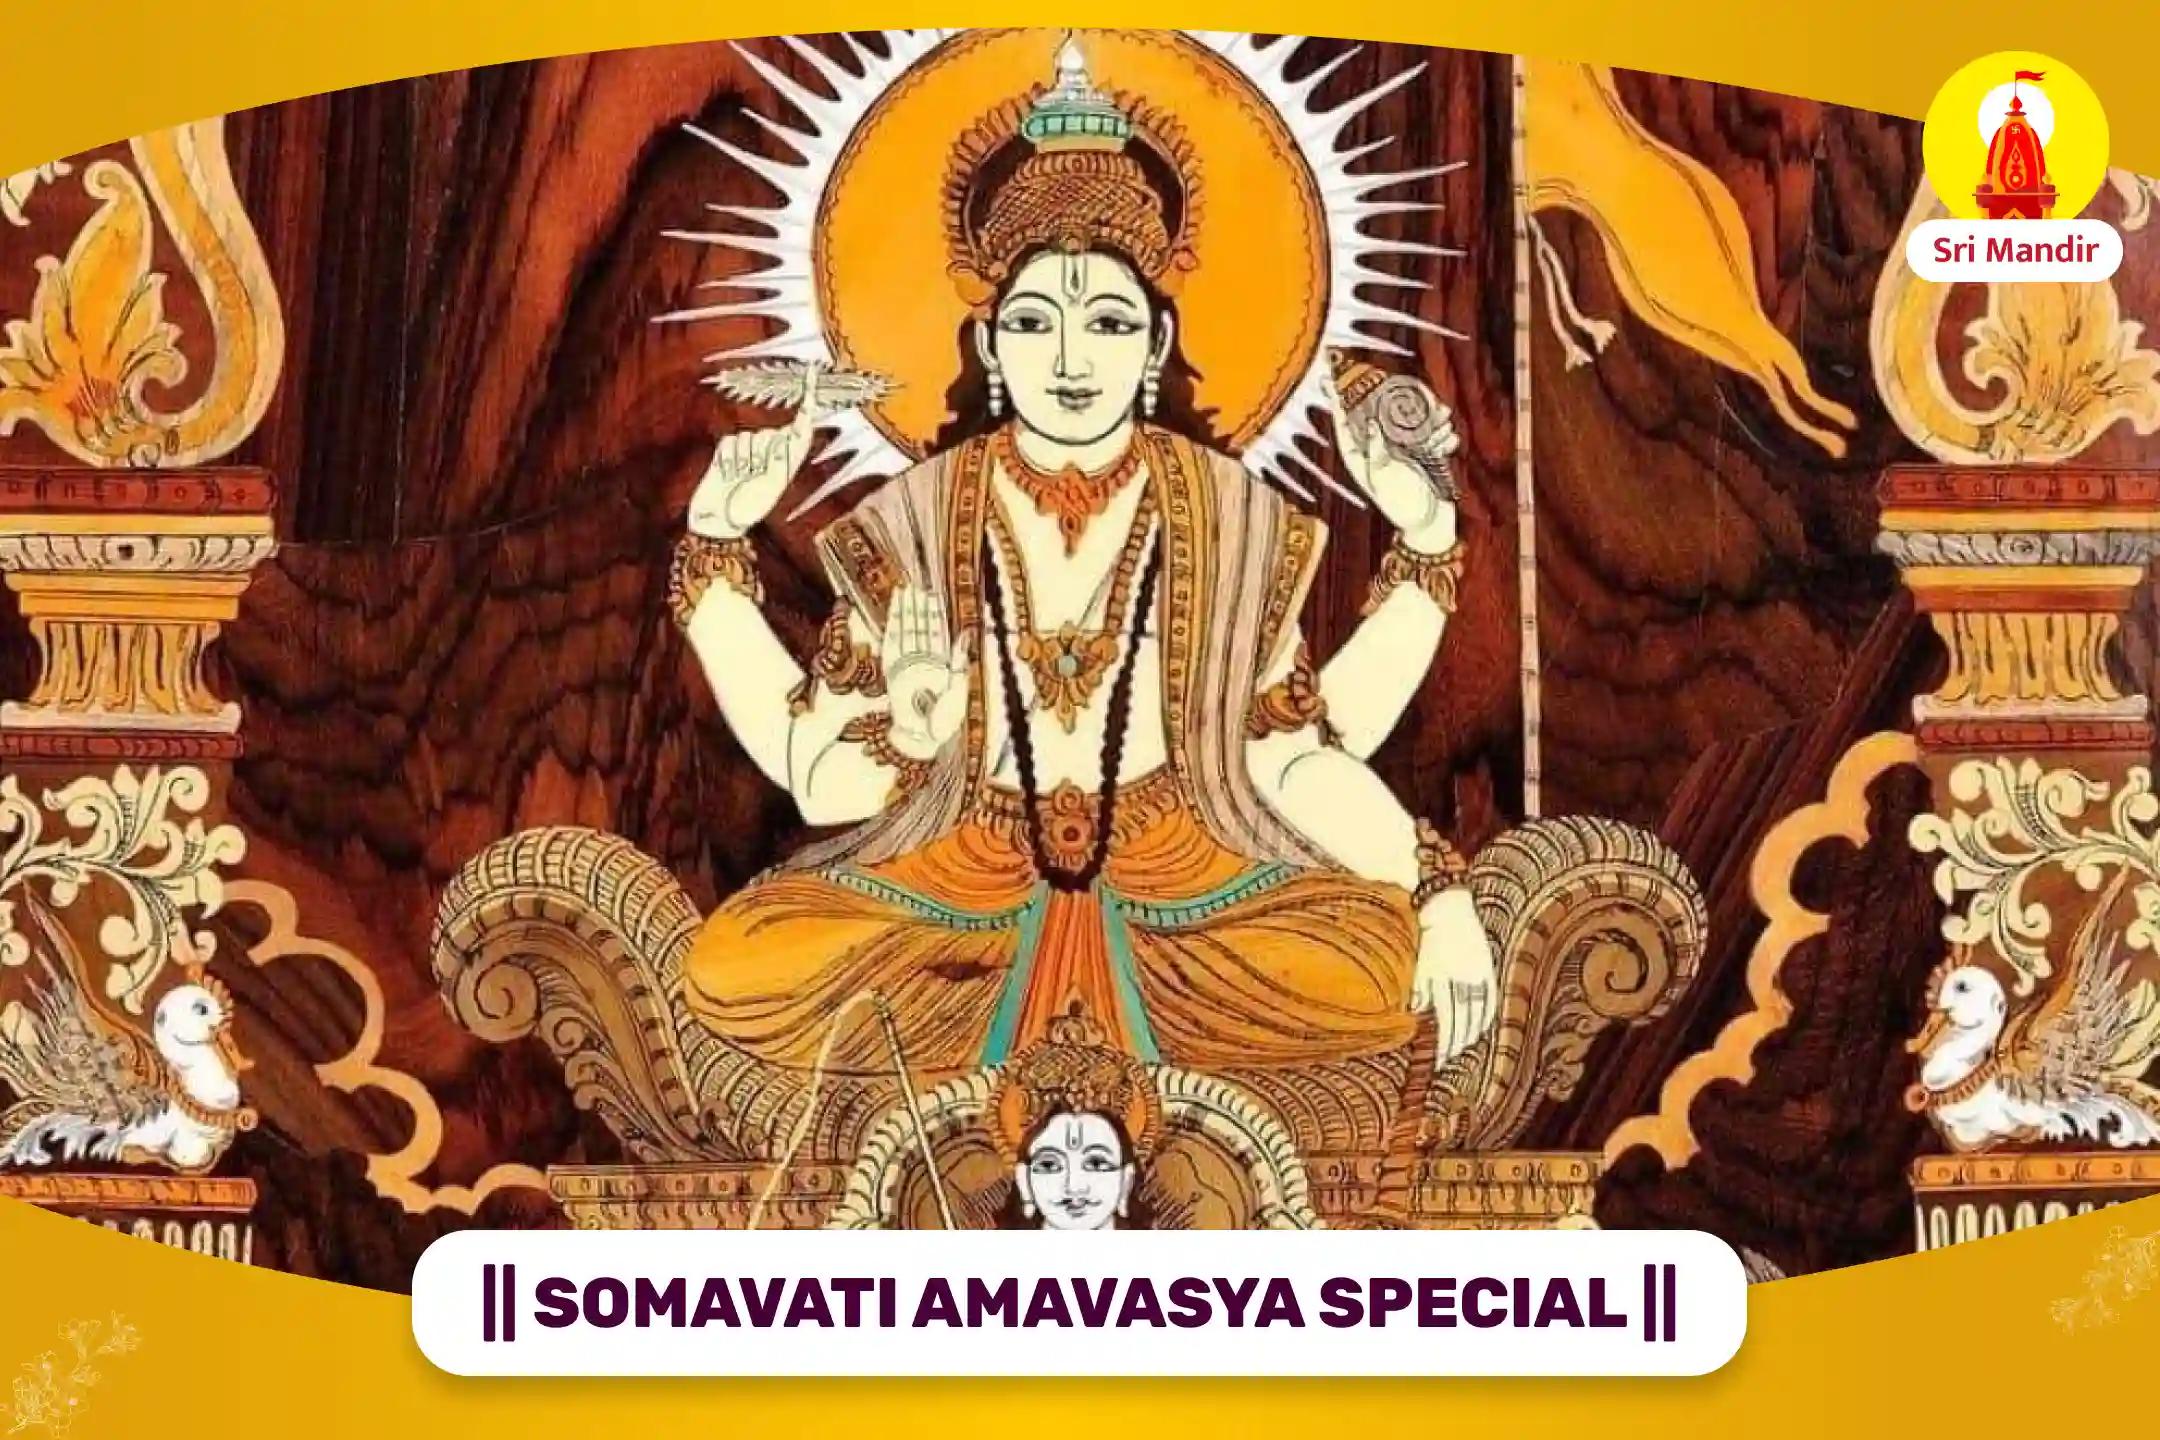 Somavati Amavasya Special Rahu Surya Grahan Dosha Mukti Puja and Rudrabhishek for Overcoming Financial Challenges and Relief from Stress